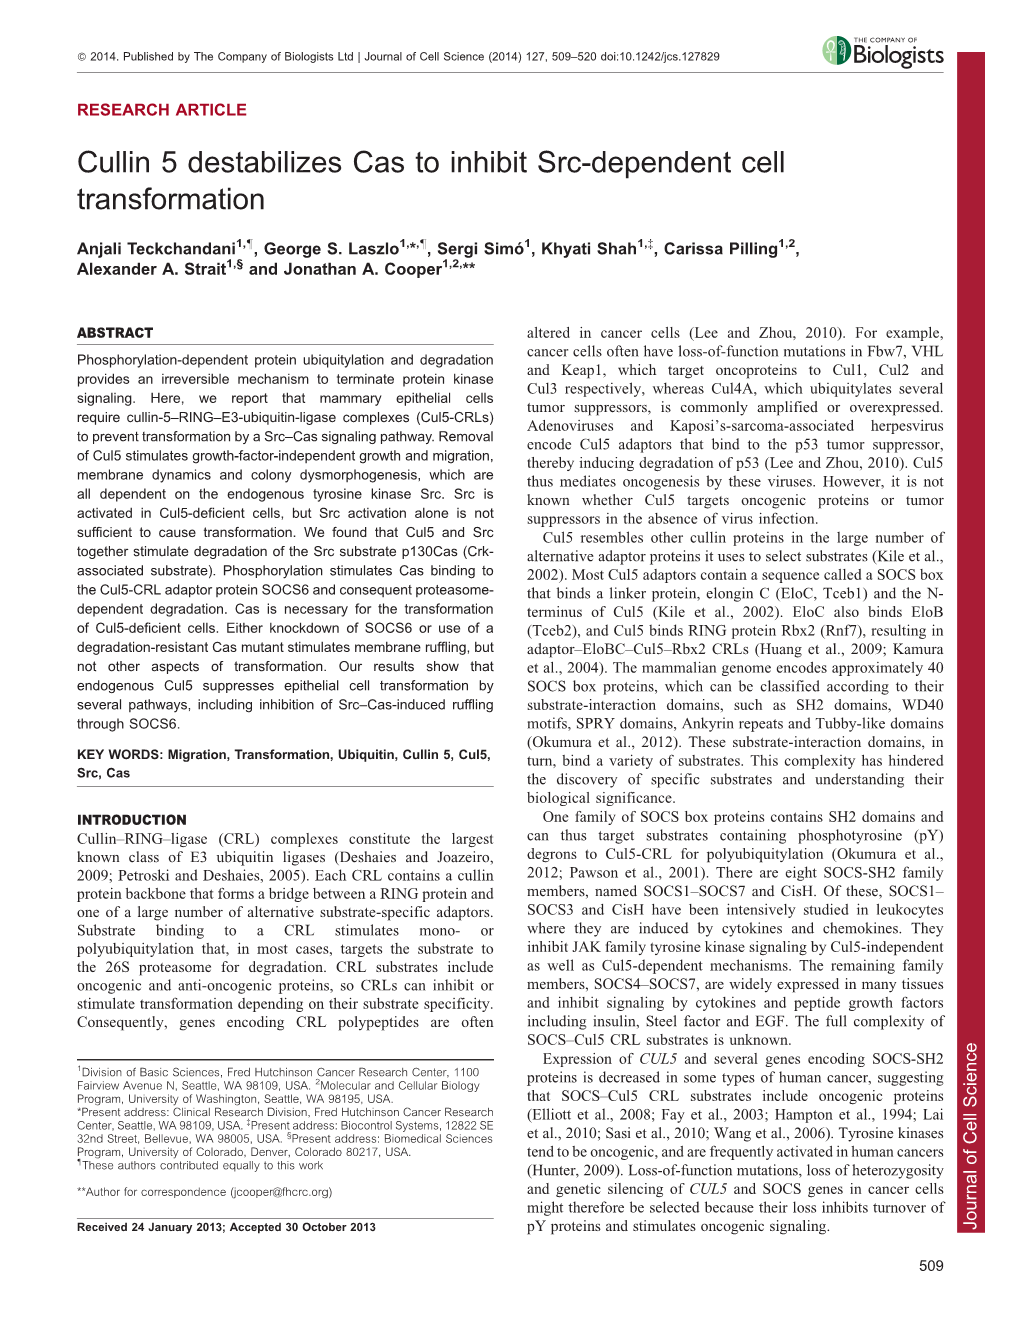 Cullin 5 Destabilizes Cas to Inhibit Src-Dependent Cell Transformation